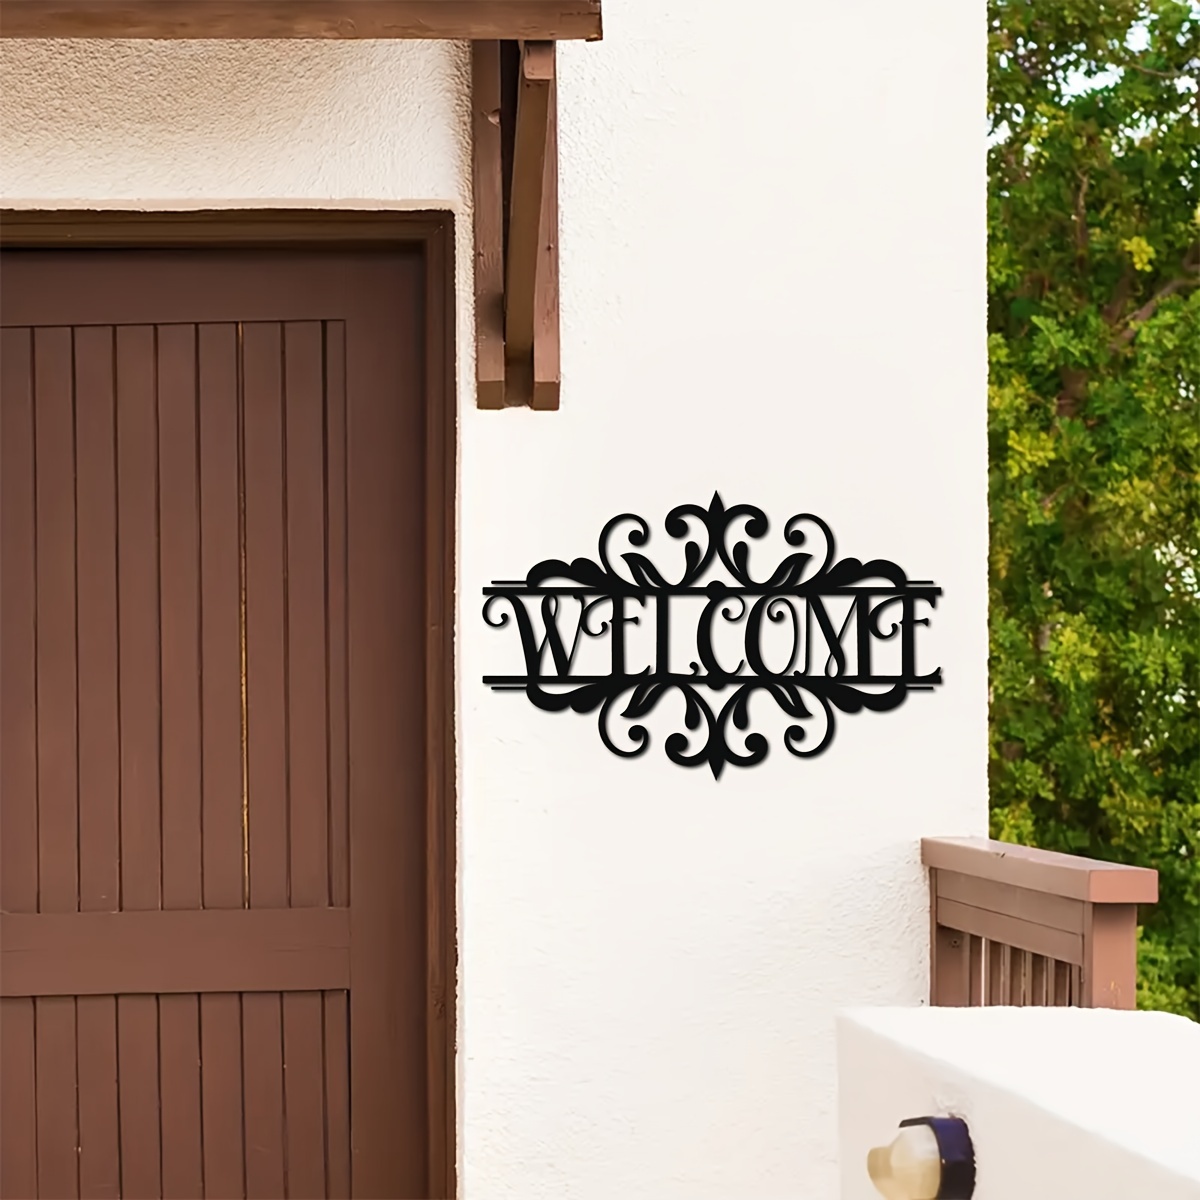 1pc ウェルカムメタルサイン ~ 屋外メタルサイン、ドアハンガーサイン、ポーチサイン、ドア装飾、壁装飾、家の装飾